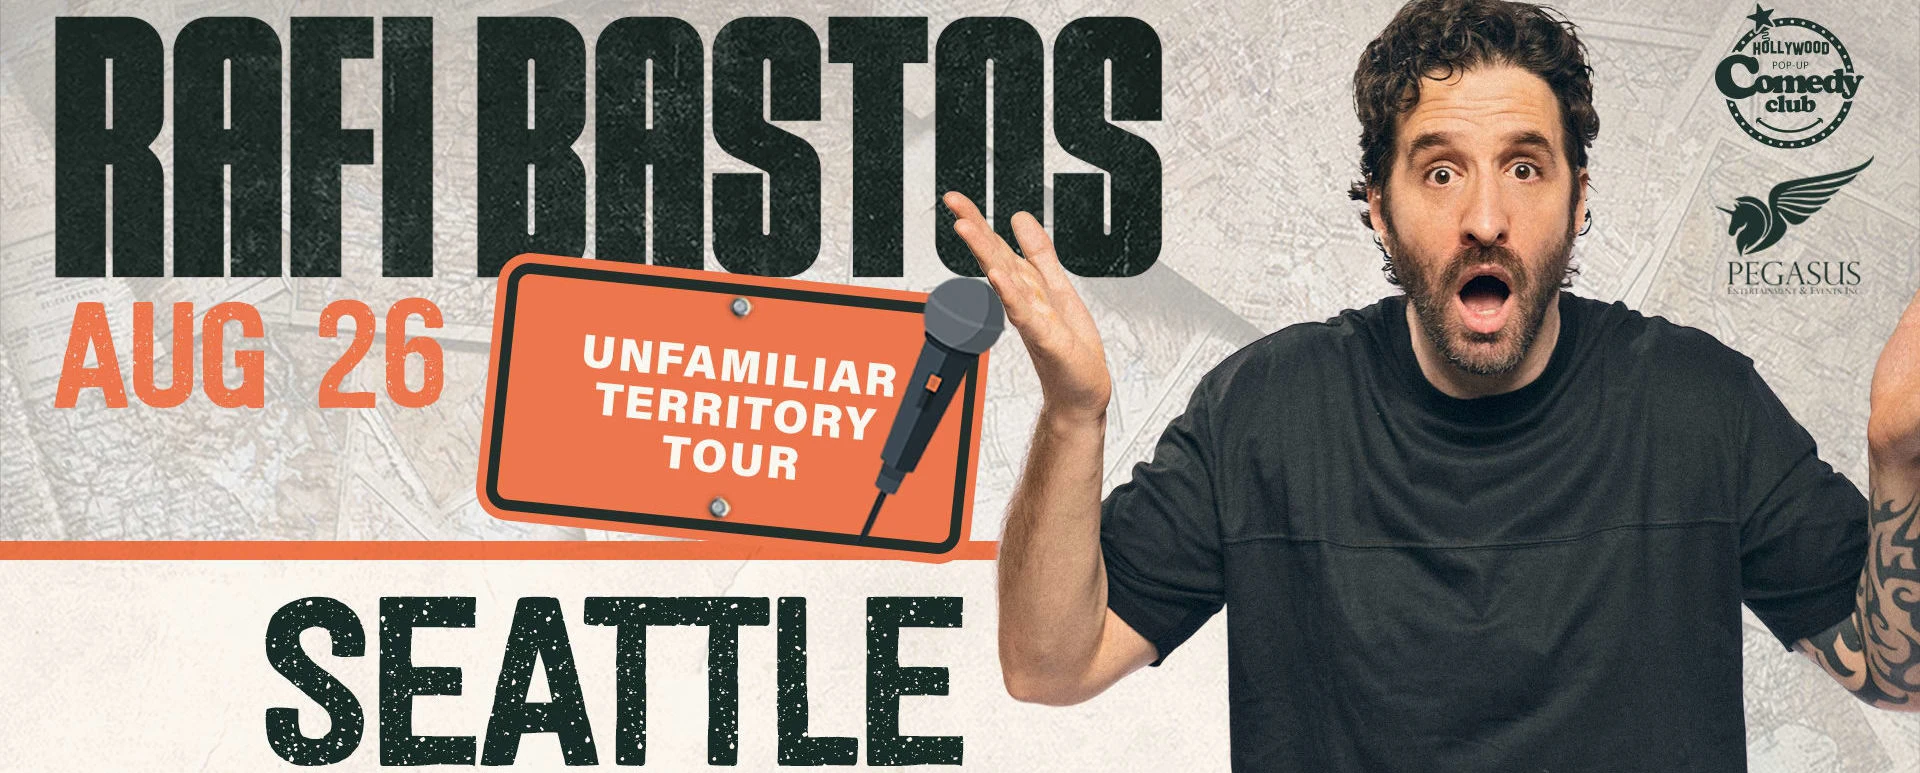 Rafi Bastos "Unfamiliar Territory Tour"